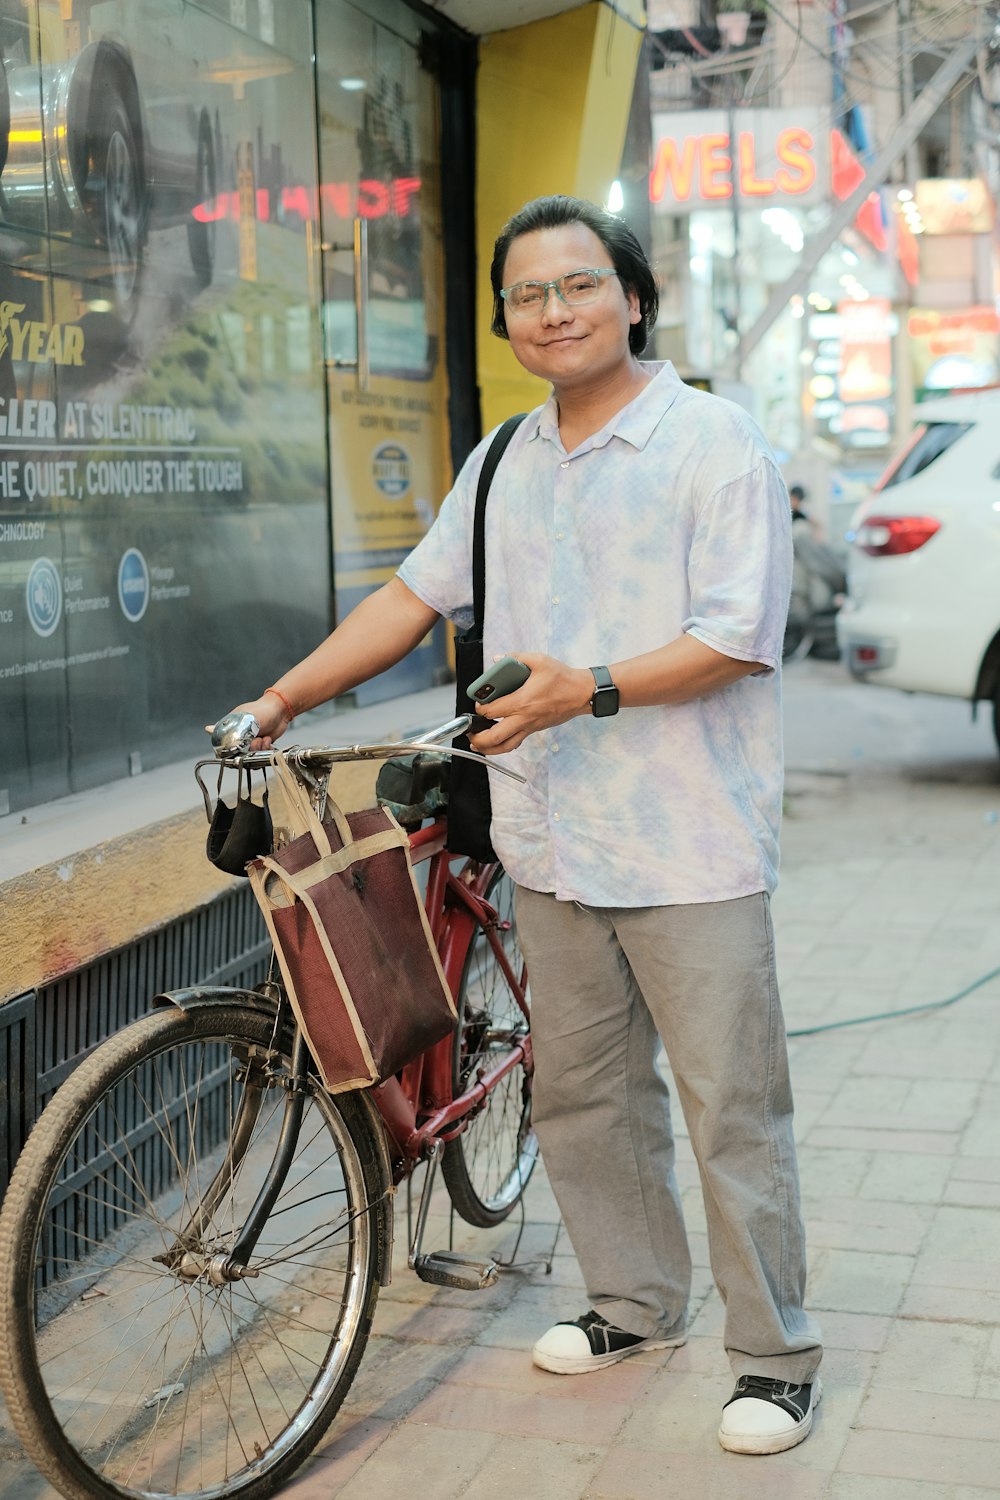 a man standing next to a bike on a sidewalk